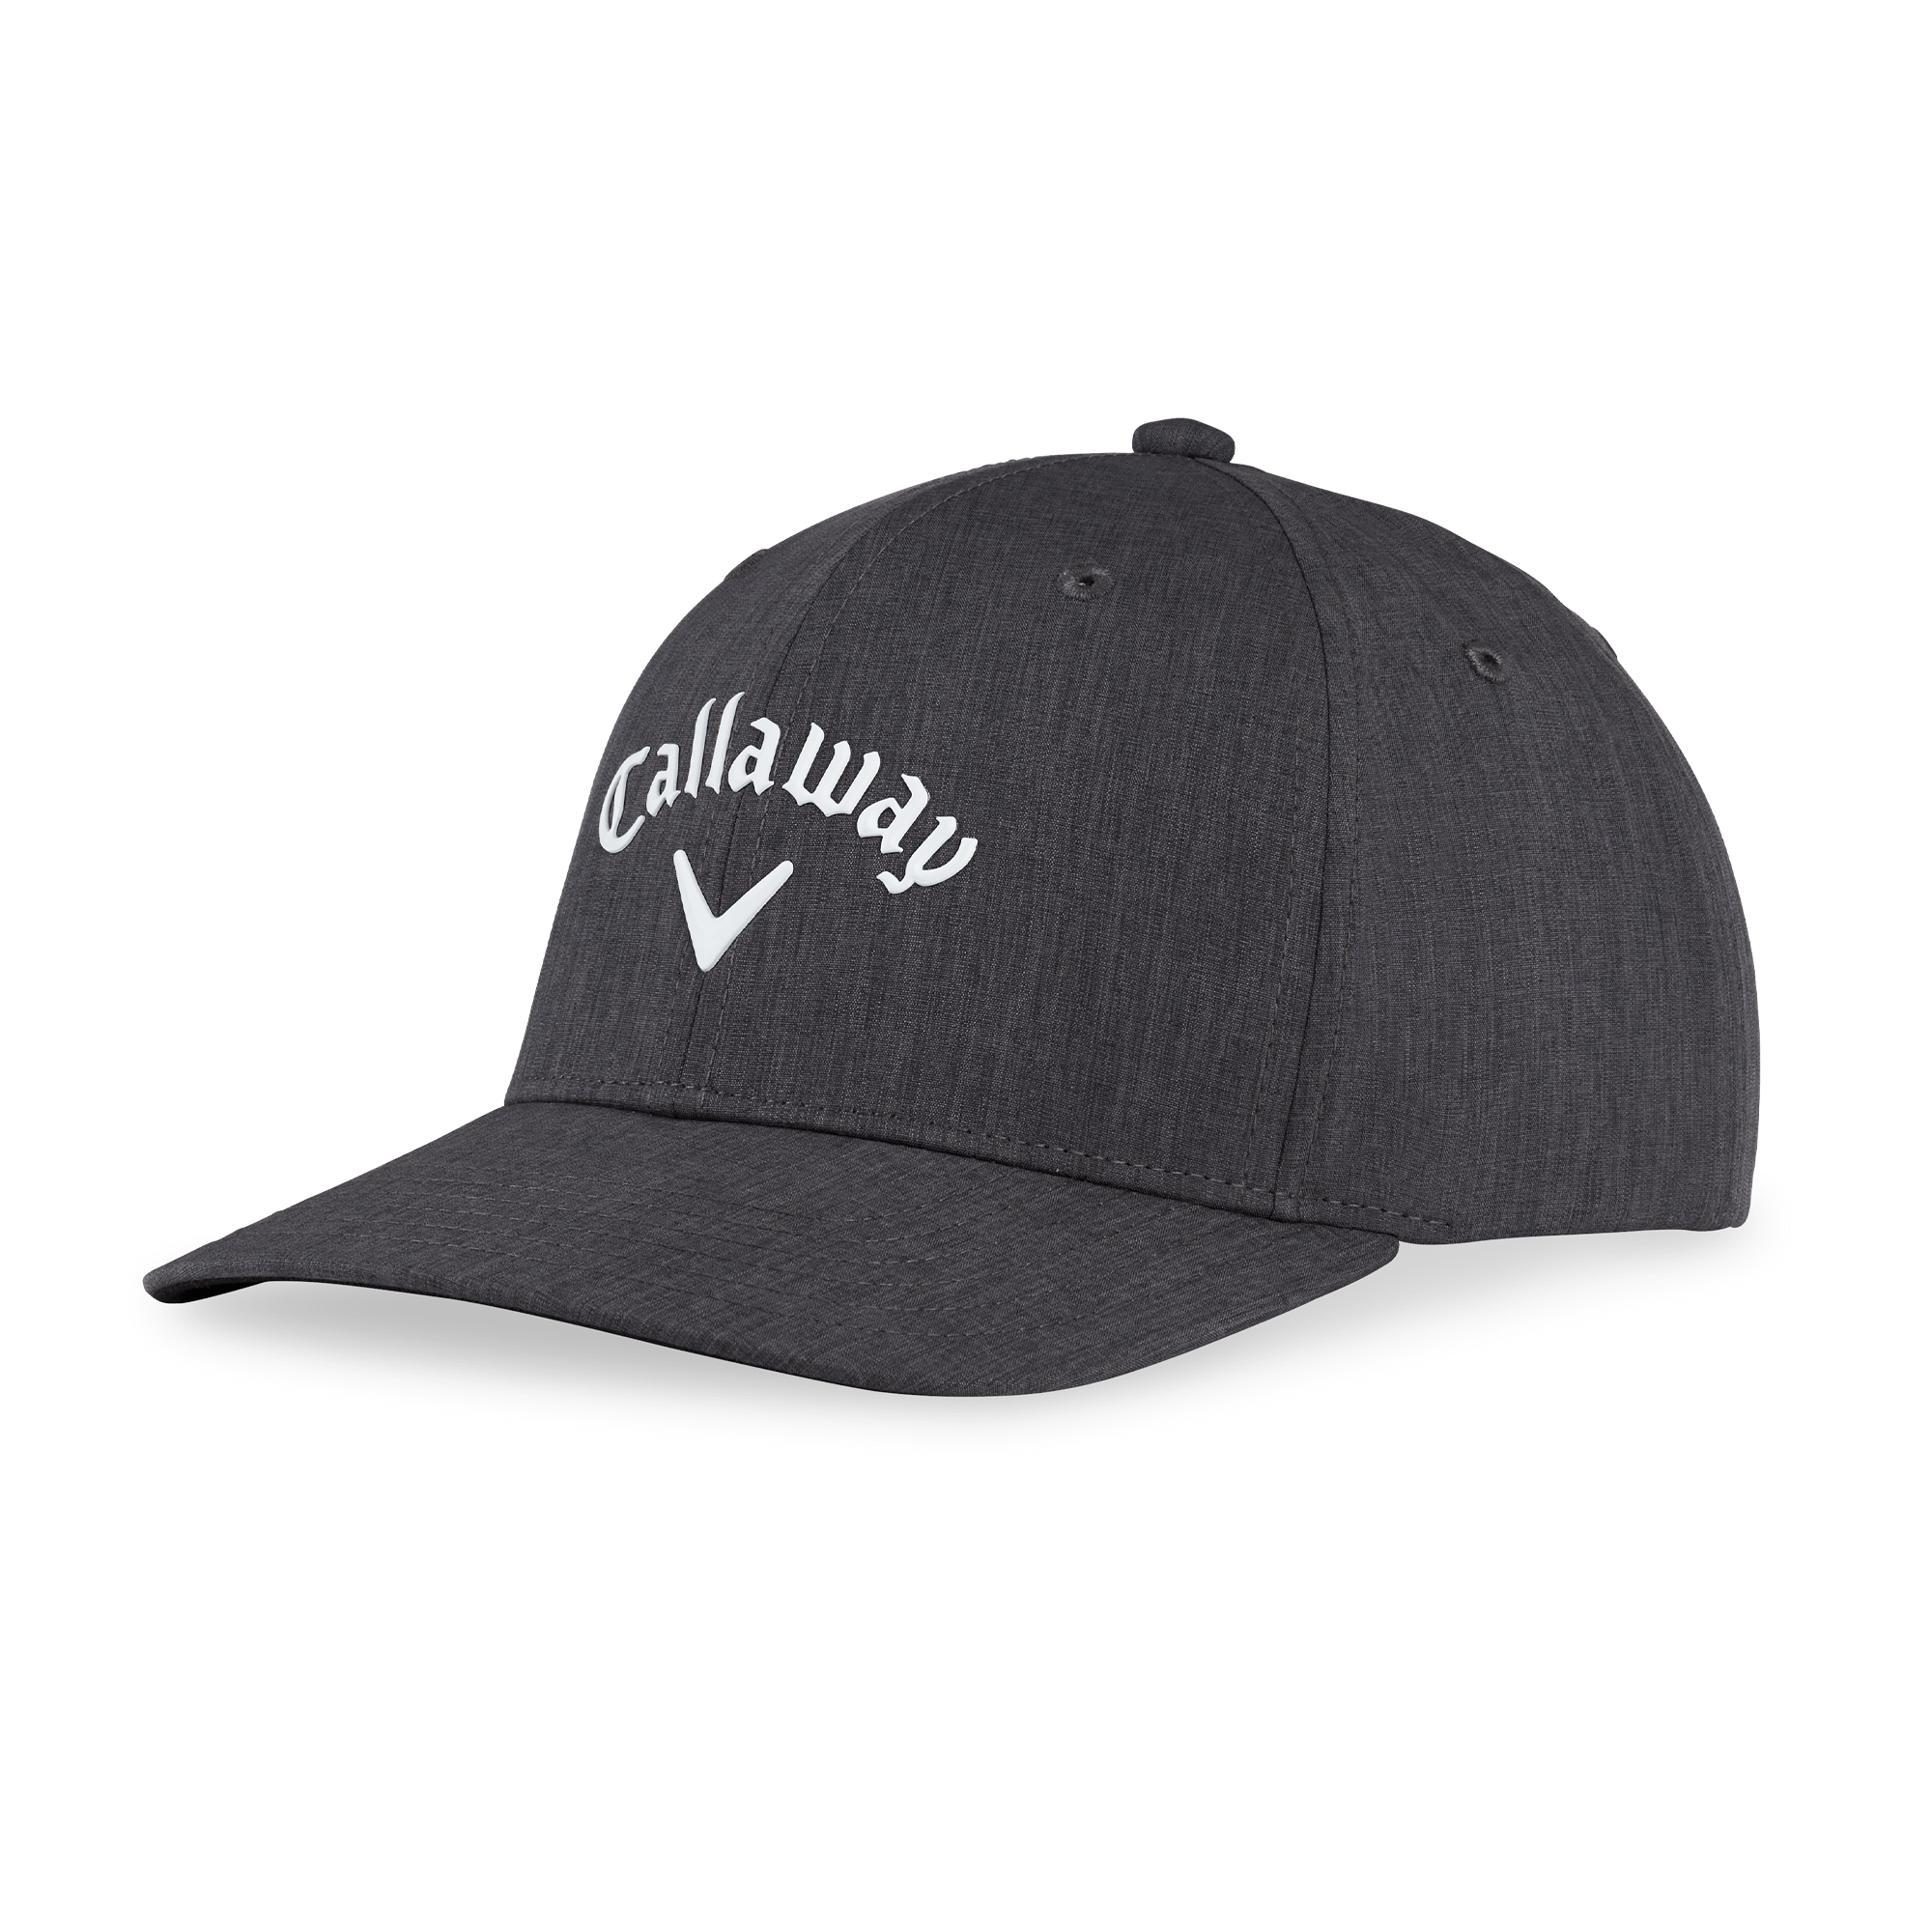 Buy Callaway Golf 2022 Flat Bill Adjustable Hat, Adjustable Size, Black  Color at